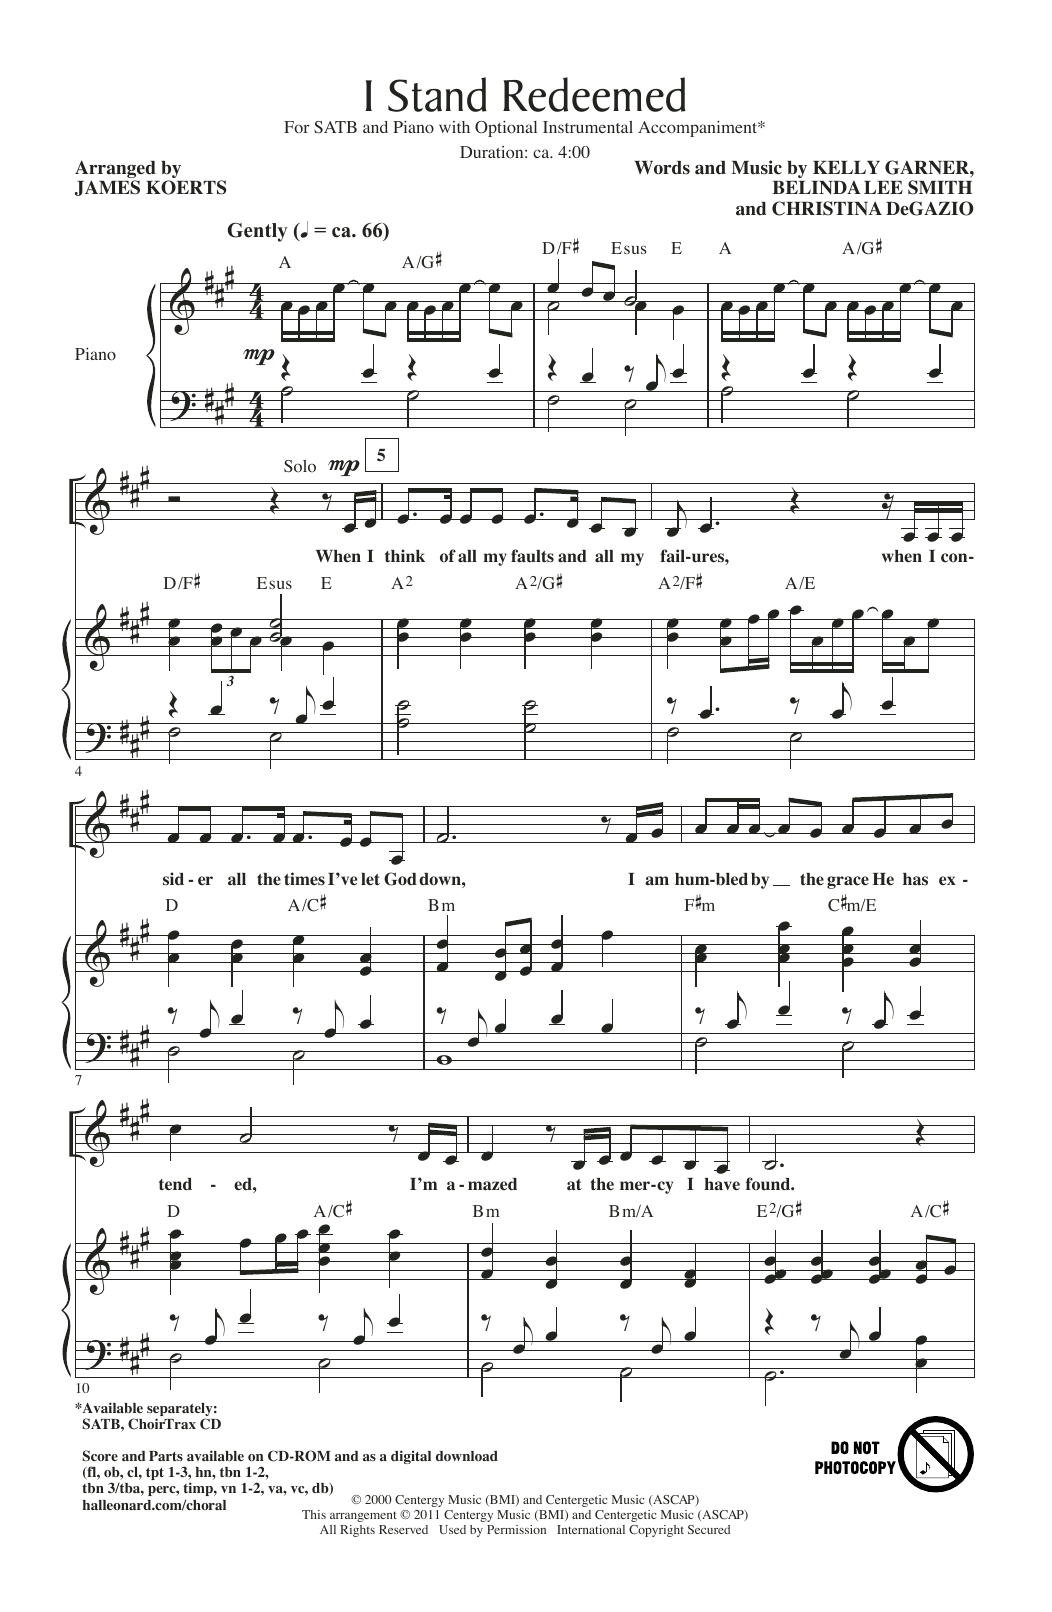 Kelly Garner, Belinda Lee Smith & Christina DeGazio I Stand Redeemed (arr. James Koerts) Sheet Music Notes & Chords for SATB Choir - Download or Print PDF